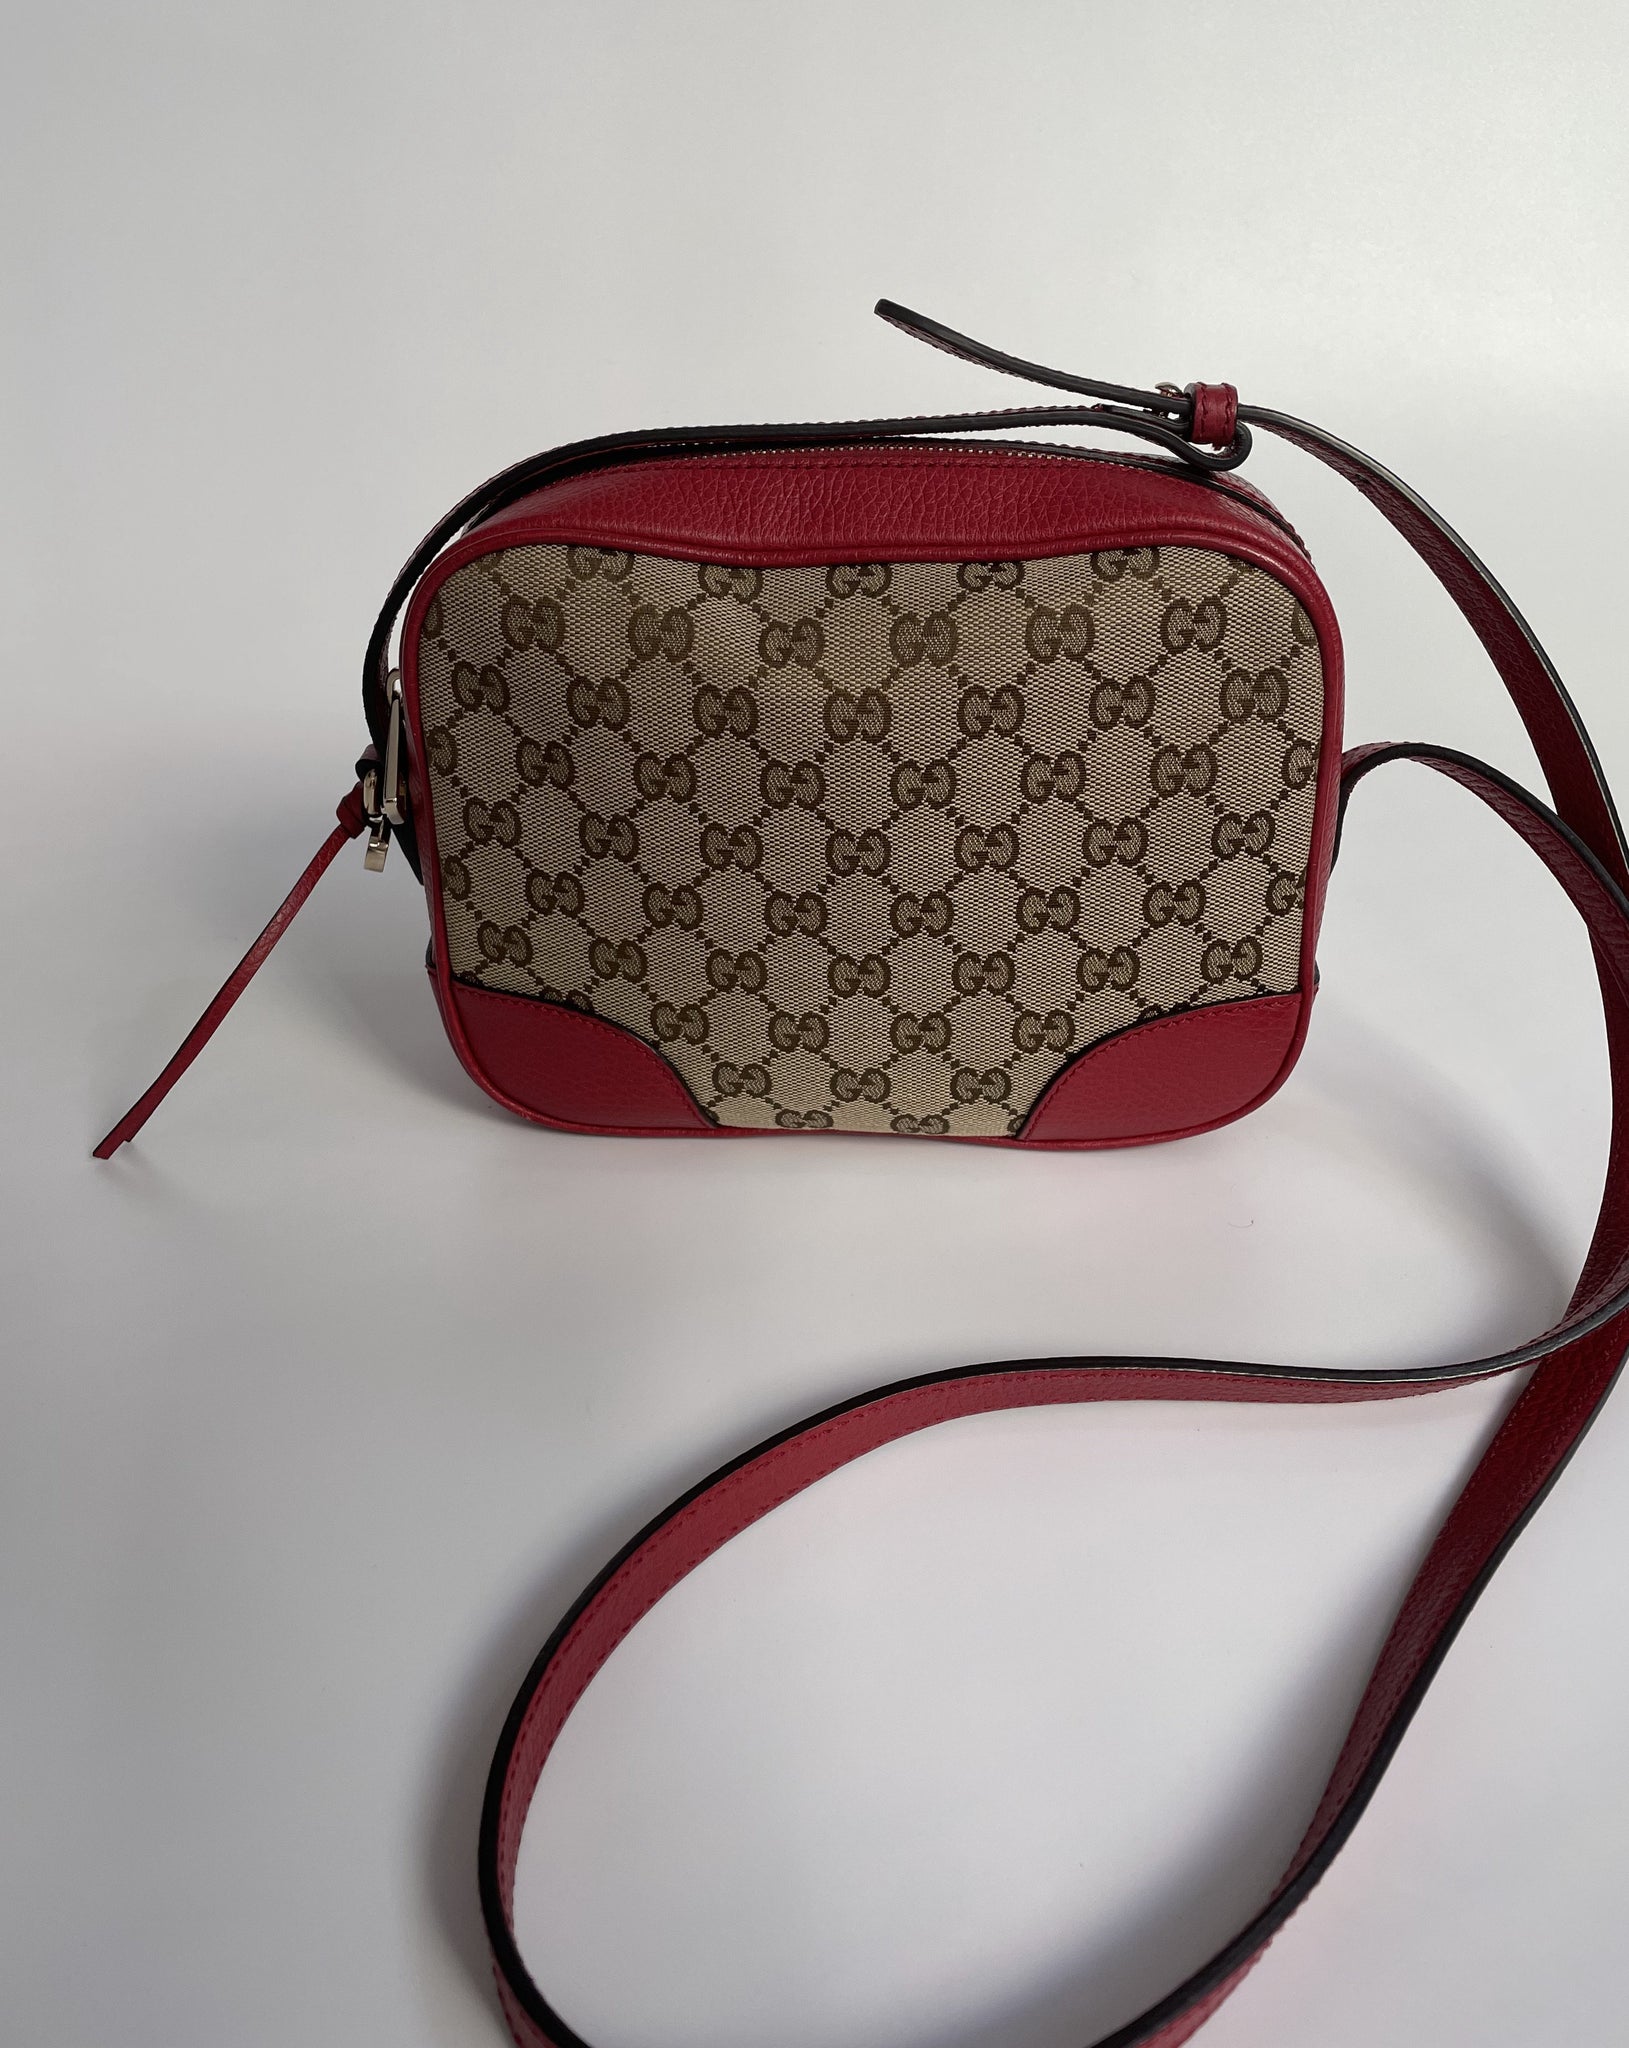 Gucci Red Canvas Bree Crossbody Bag